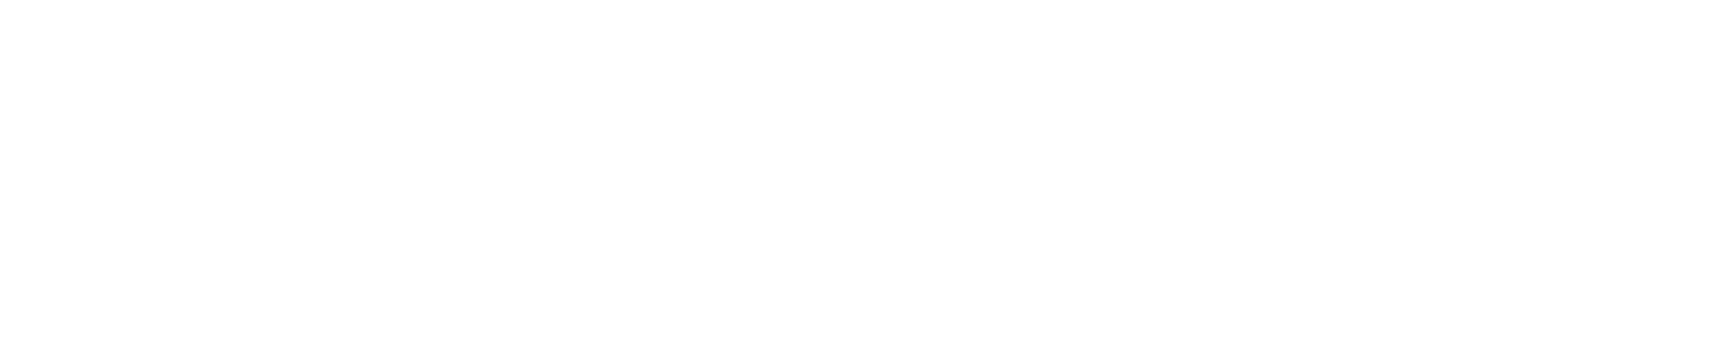 Executech Logo White 2-1